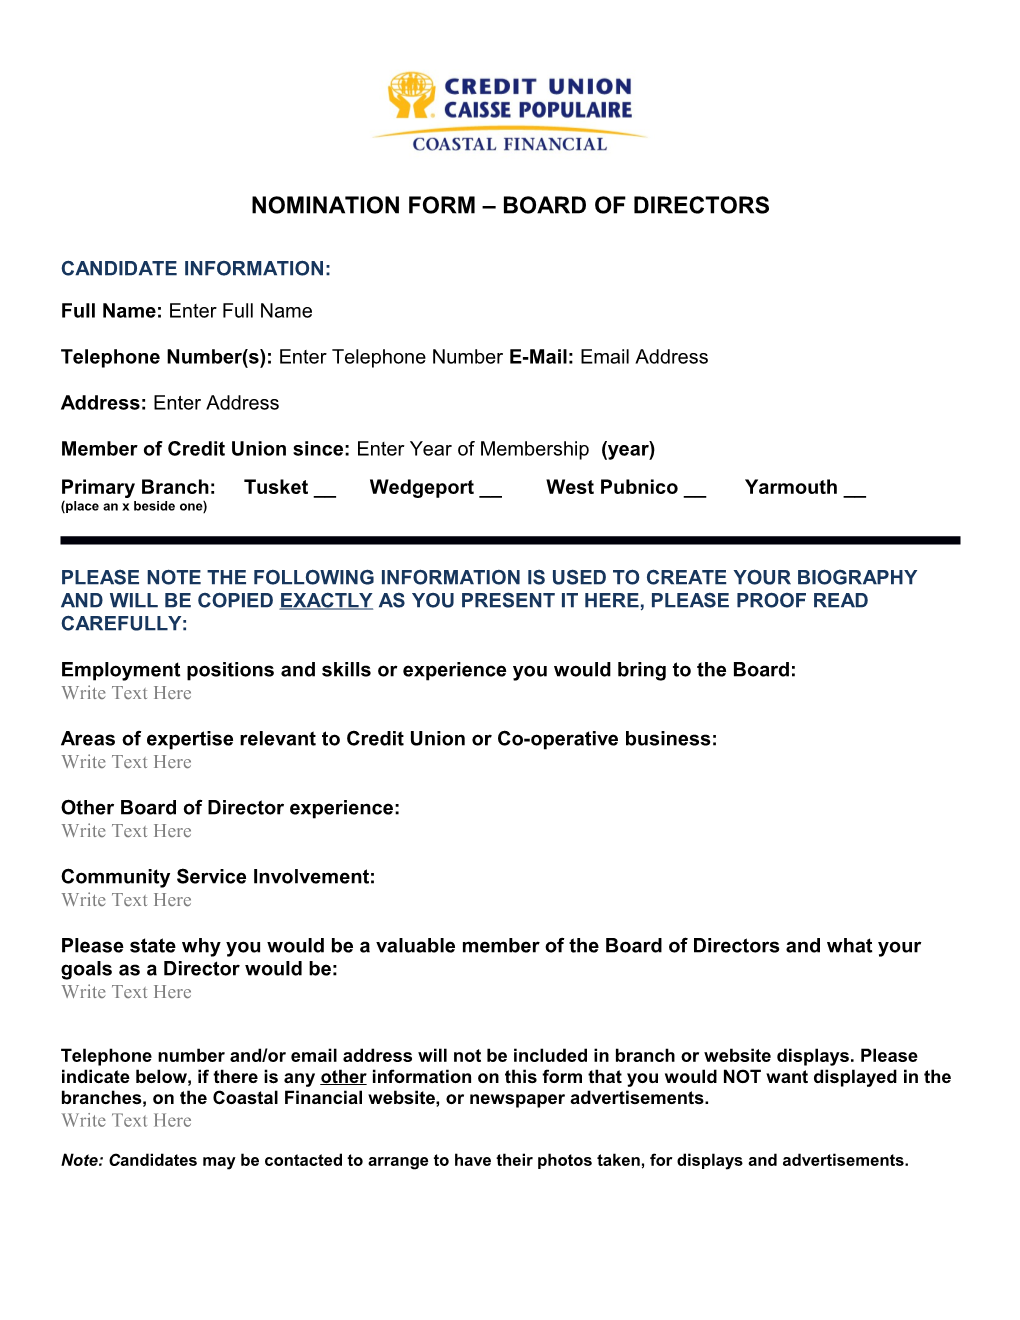 Nomination Form Board of Directors